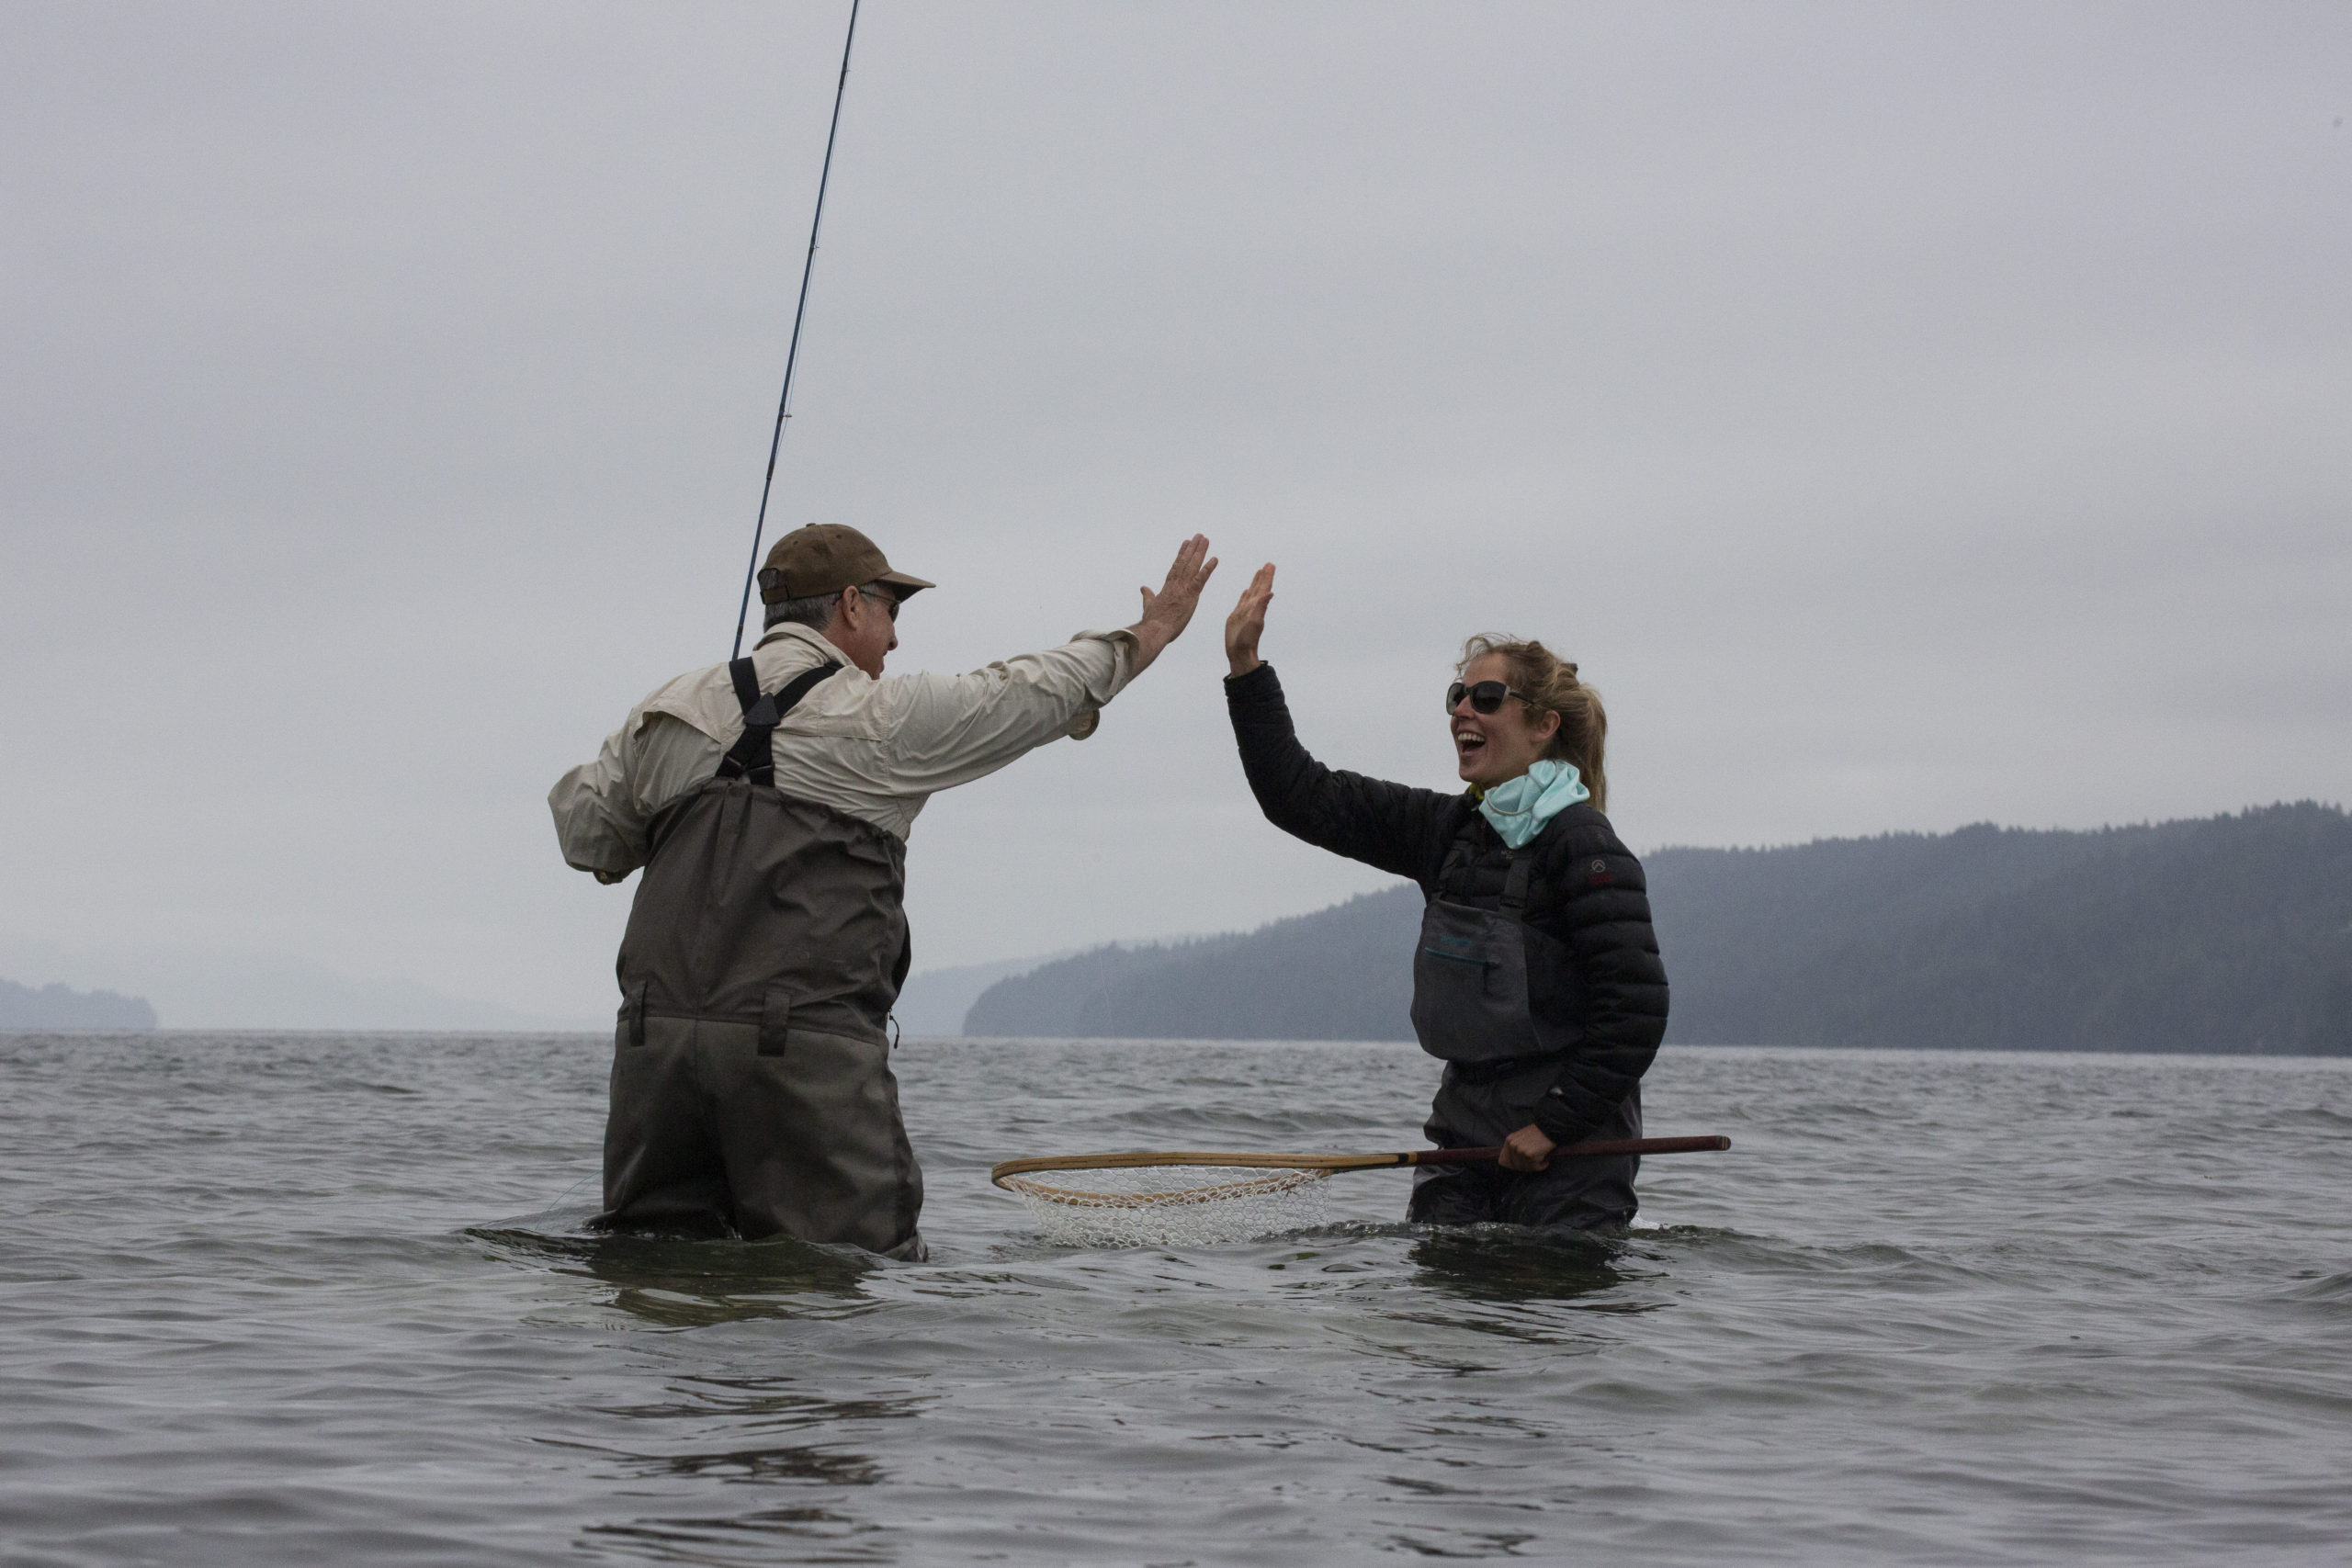 Puget Sound, WA - American Fly Fishing